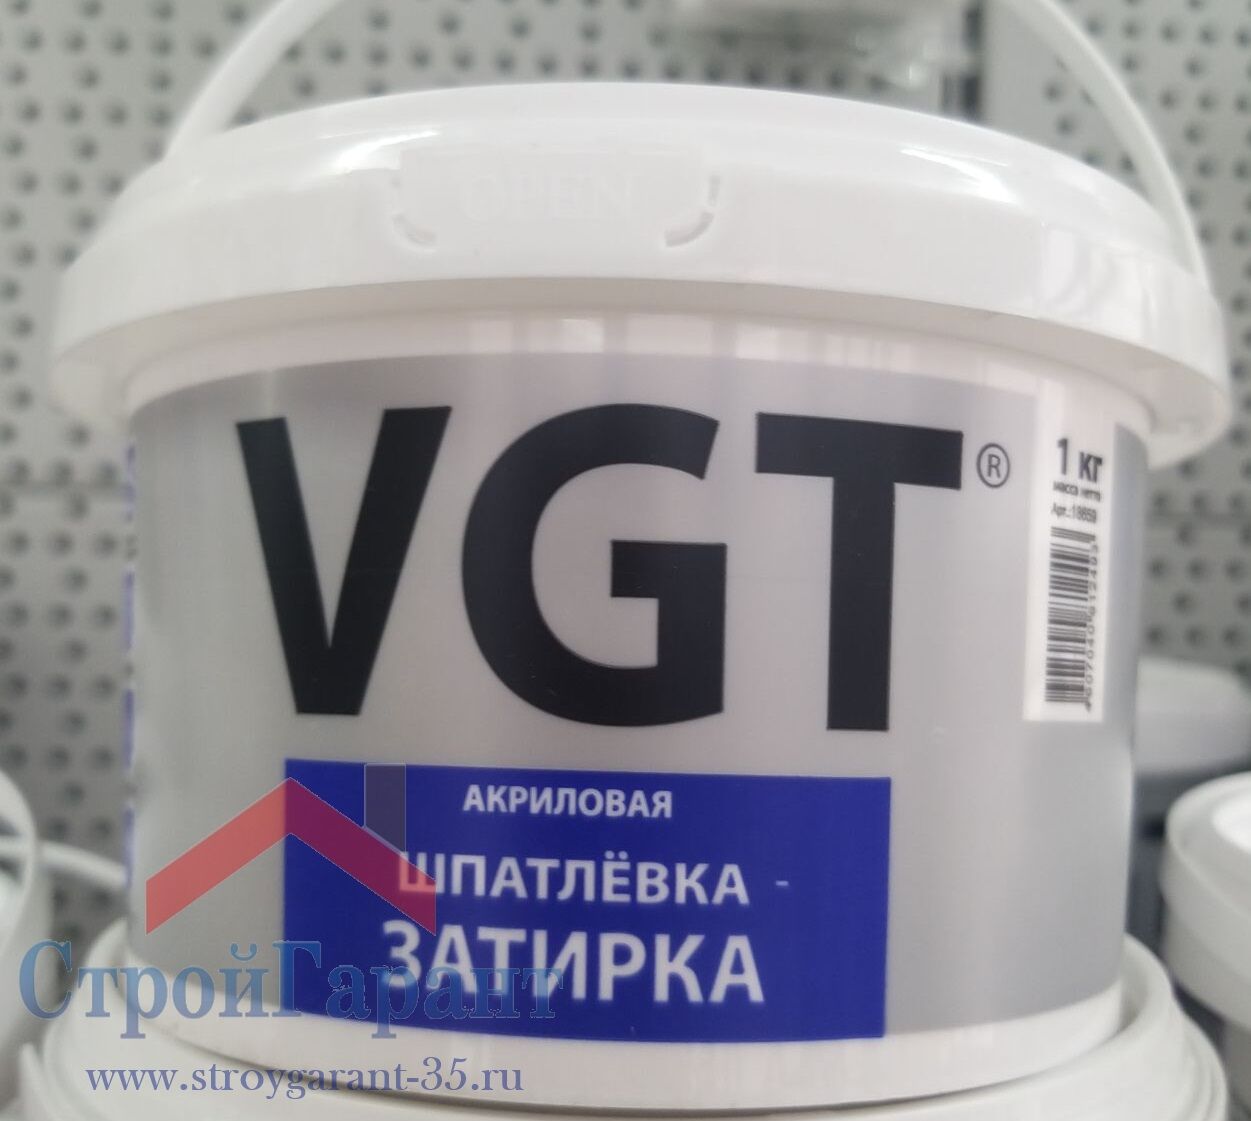 Шпатлевка-затирка VGT, банка 1 кг